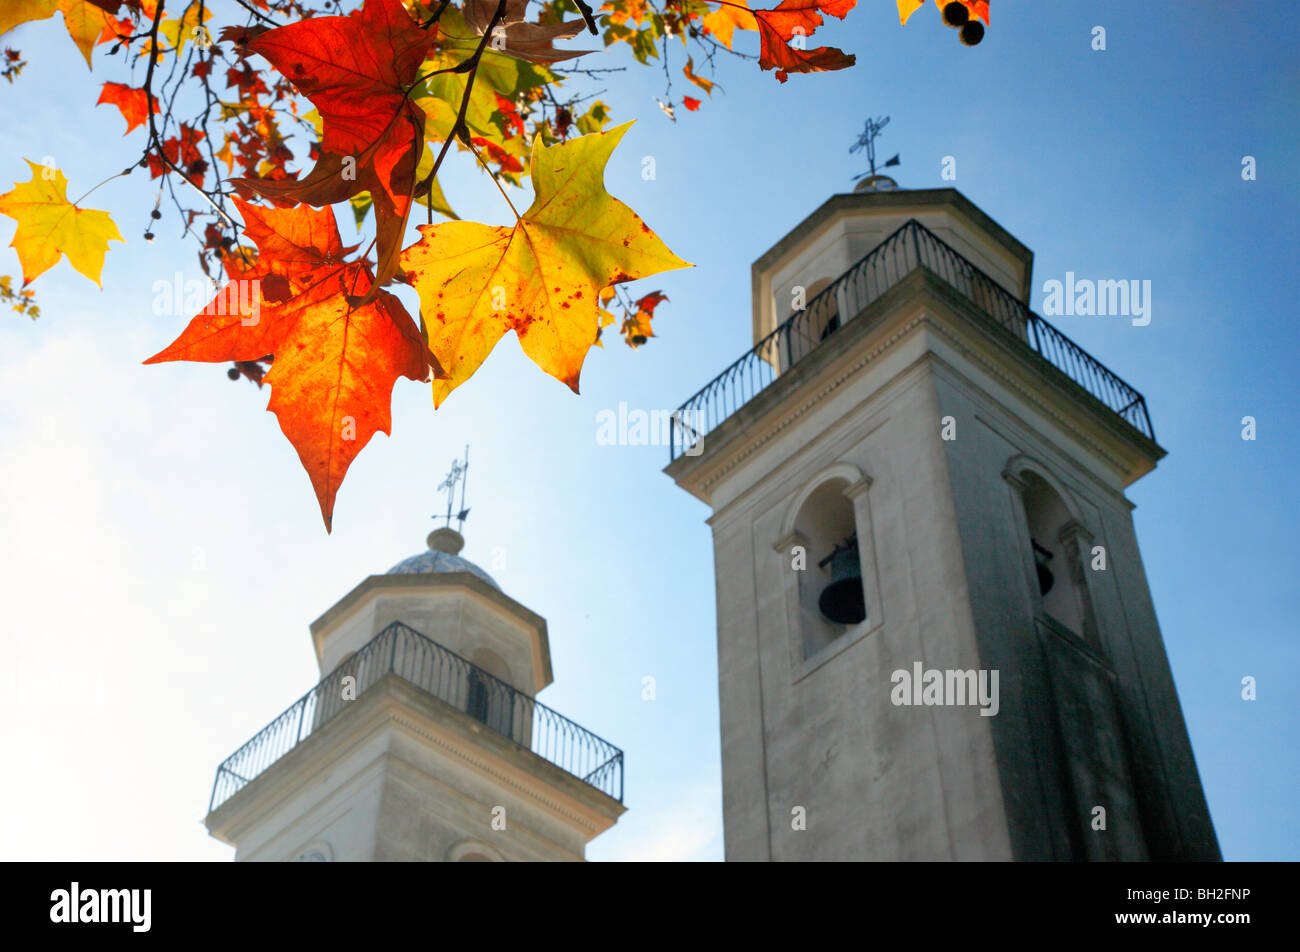 Colonia del sacramento basilica, with maple trees leaves at fall. Uruguay, south america. Stock Photo